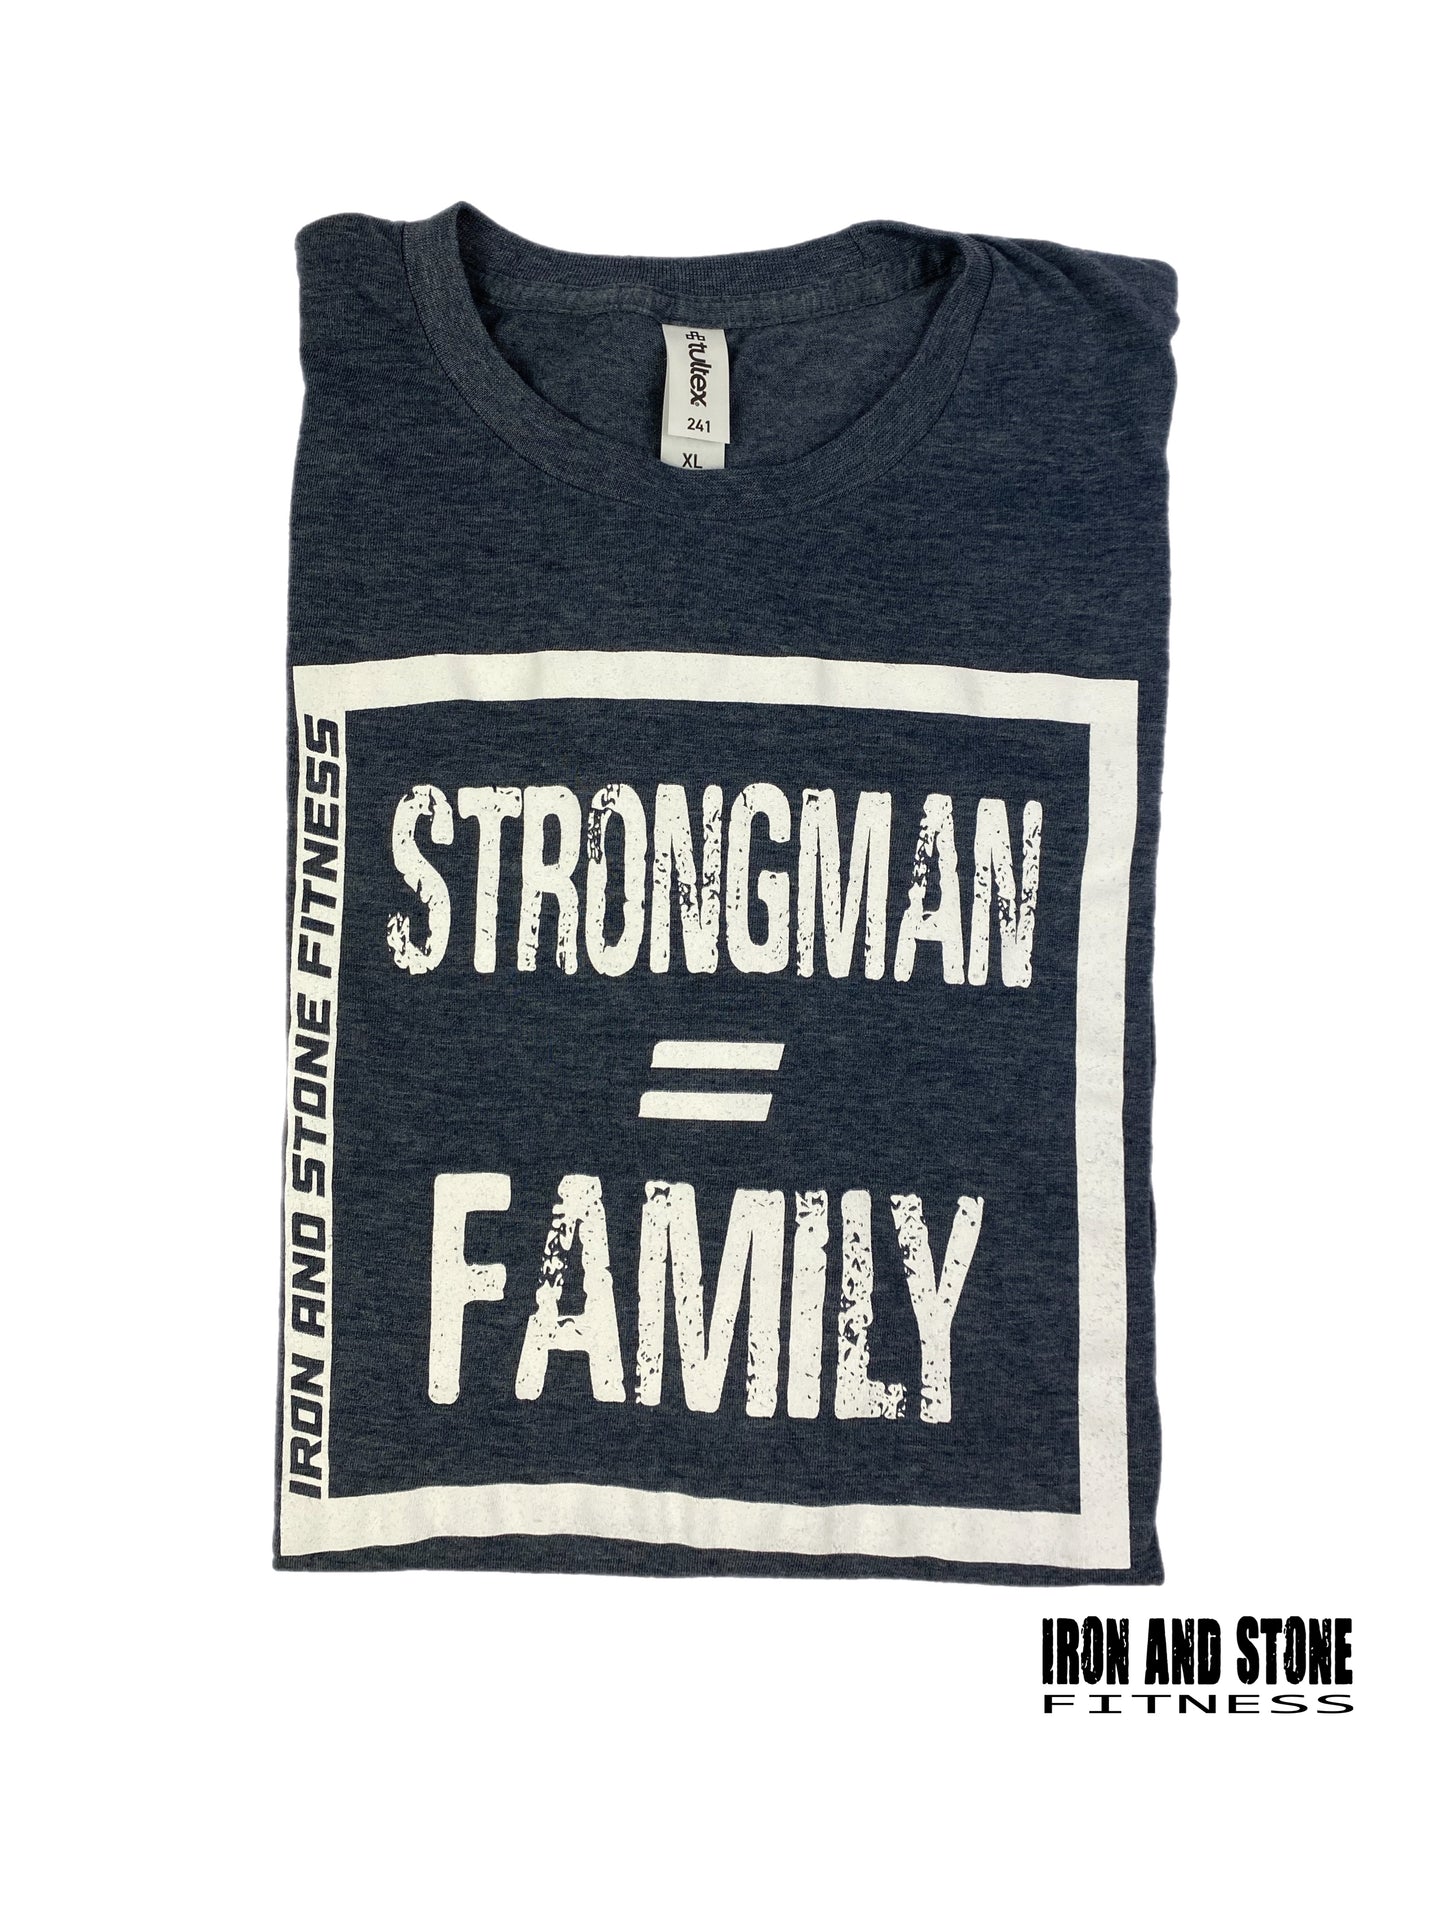 Strongman = Family